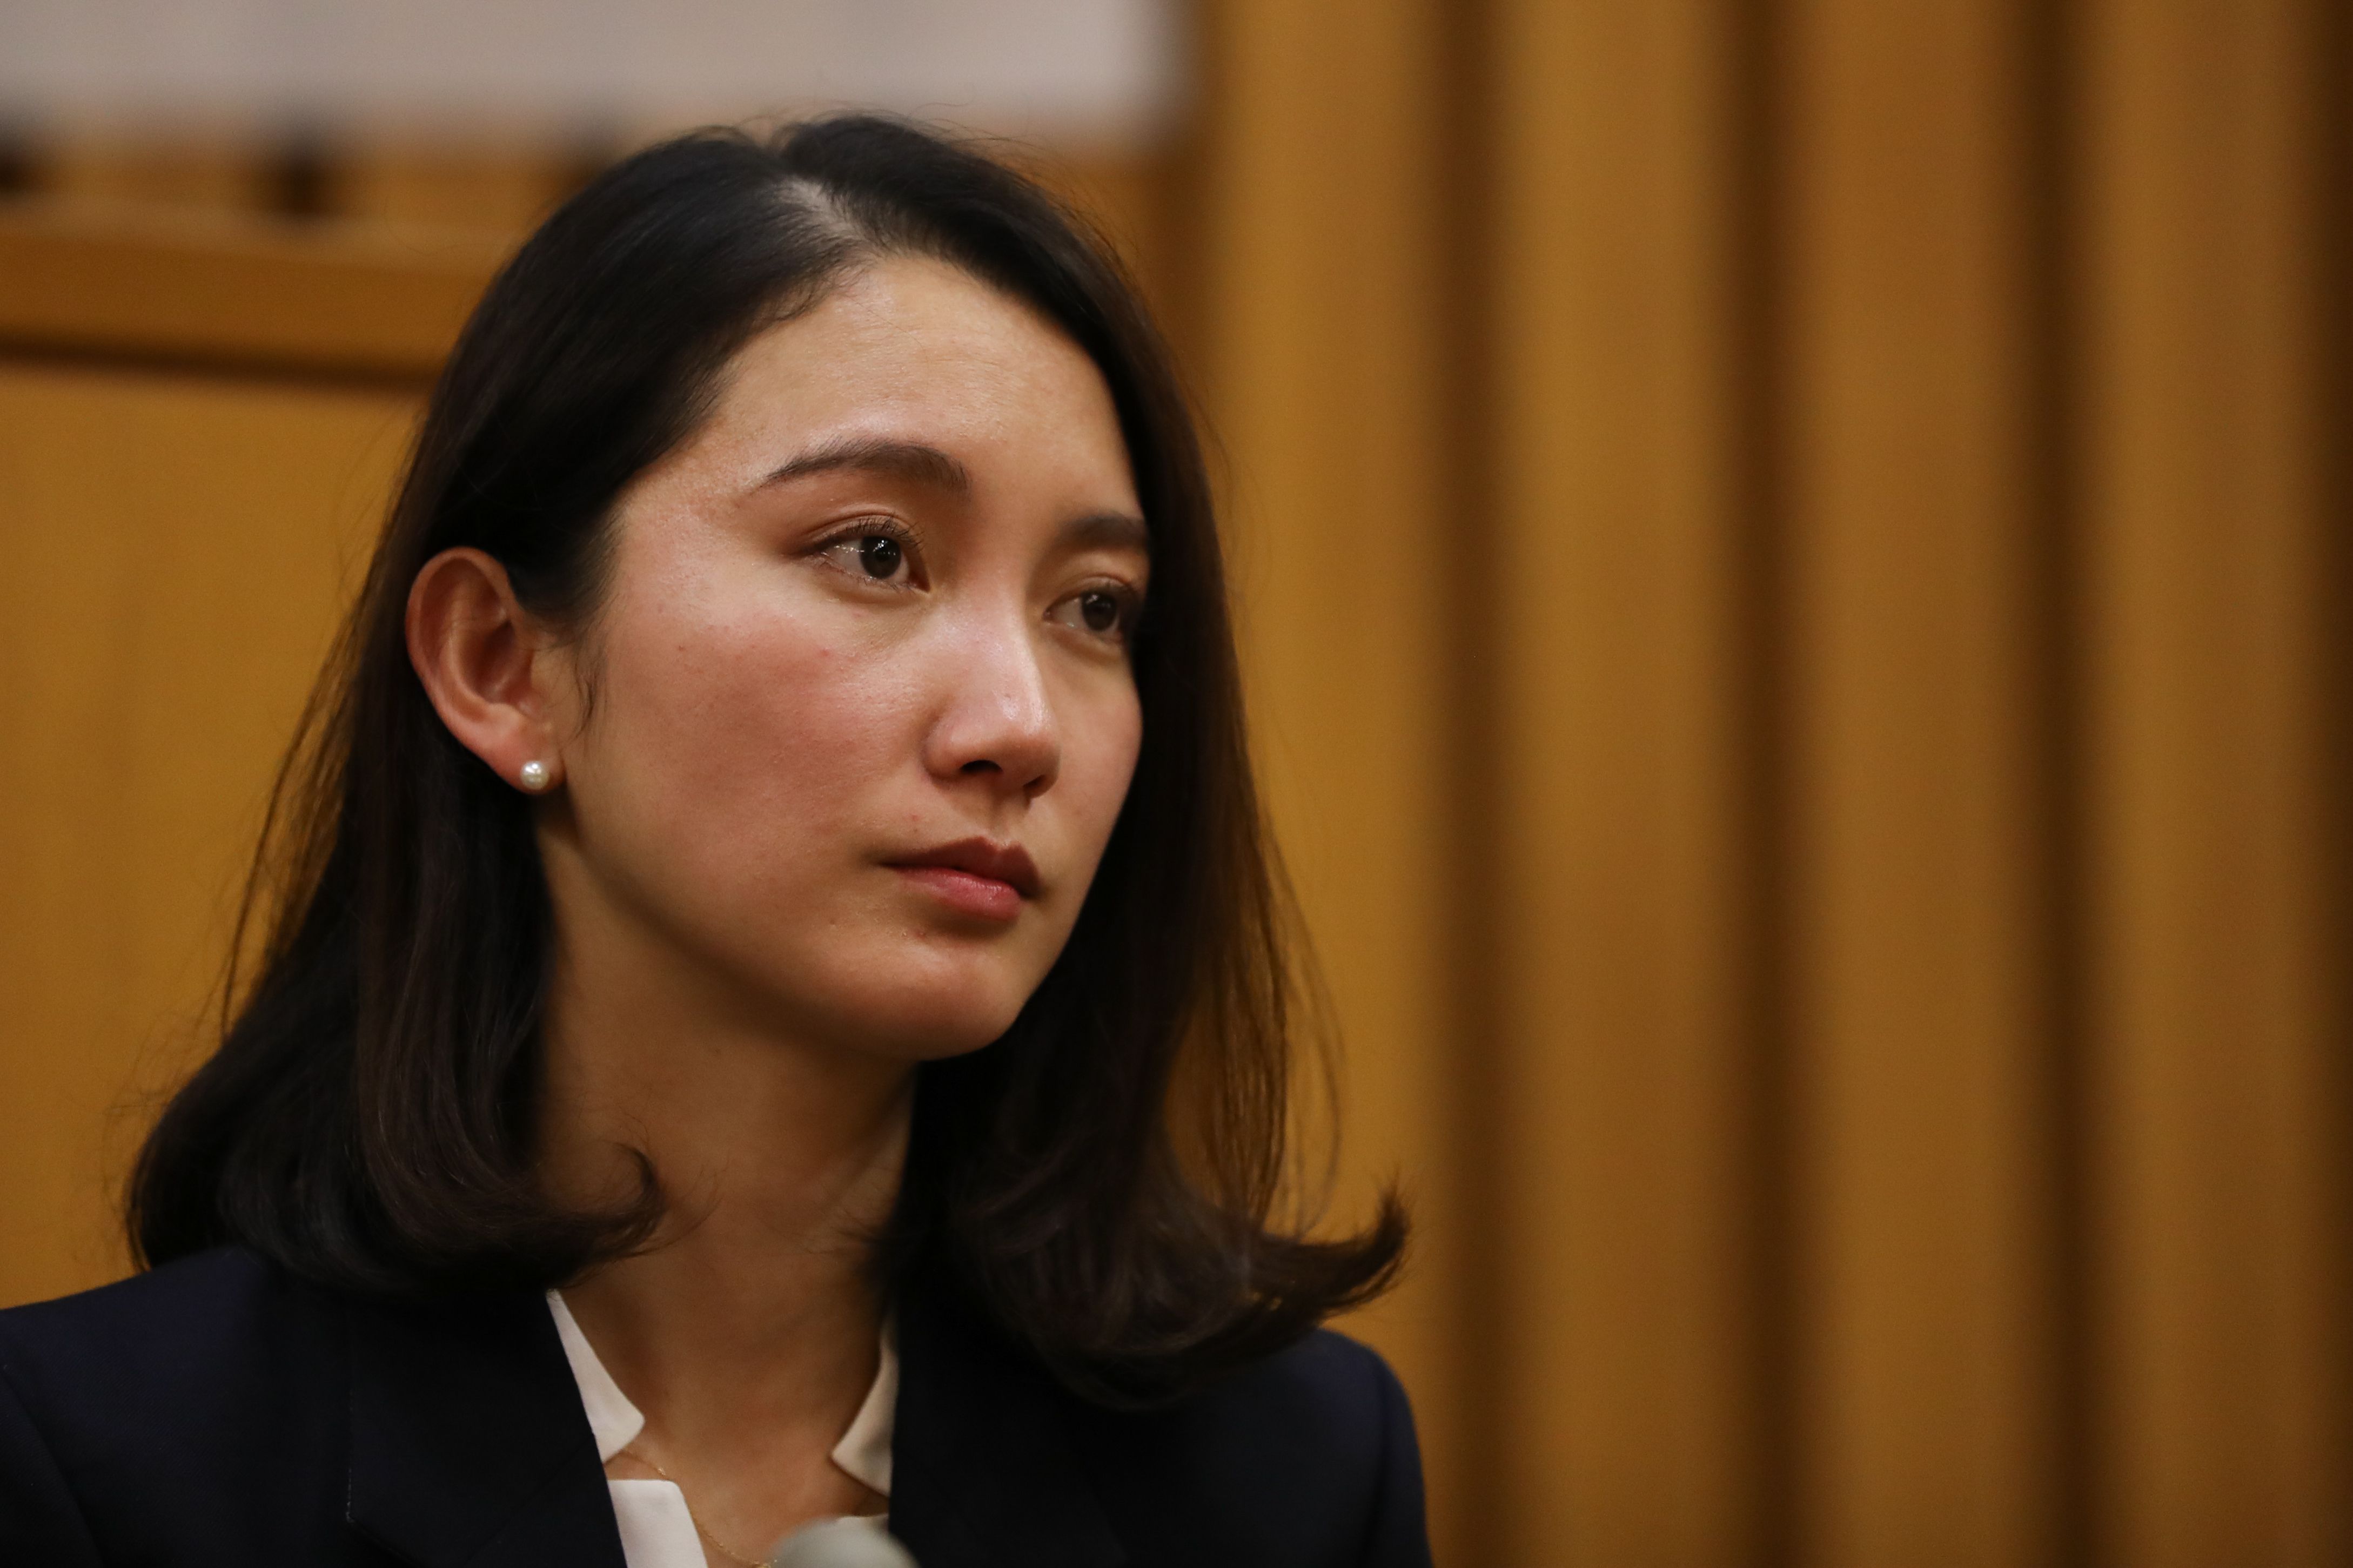 Pati Ke Samne Patni Ka Rape Xxx Sexy Hd Videos - Shiori Ito won civil case against her alleged rapist. But Japan's rape laws  need overhaul, campaigners say | CNN